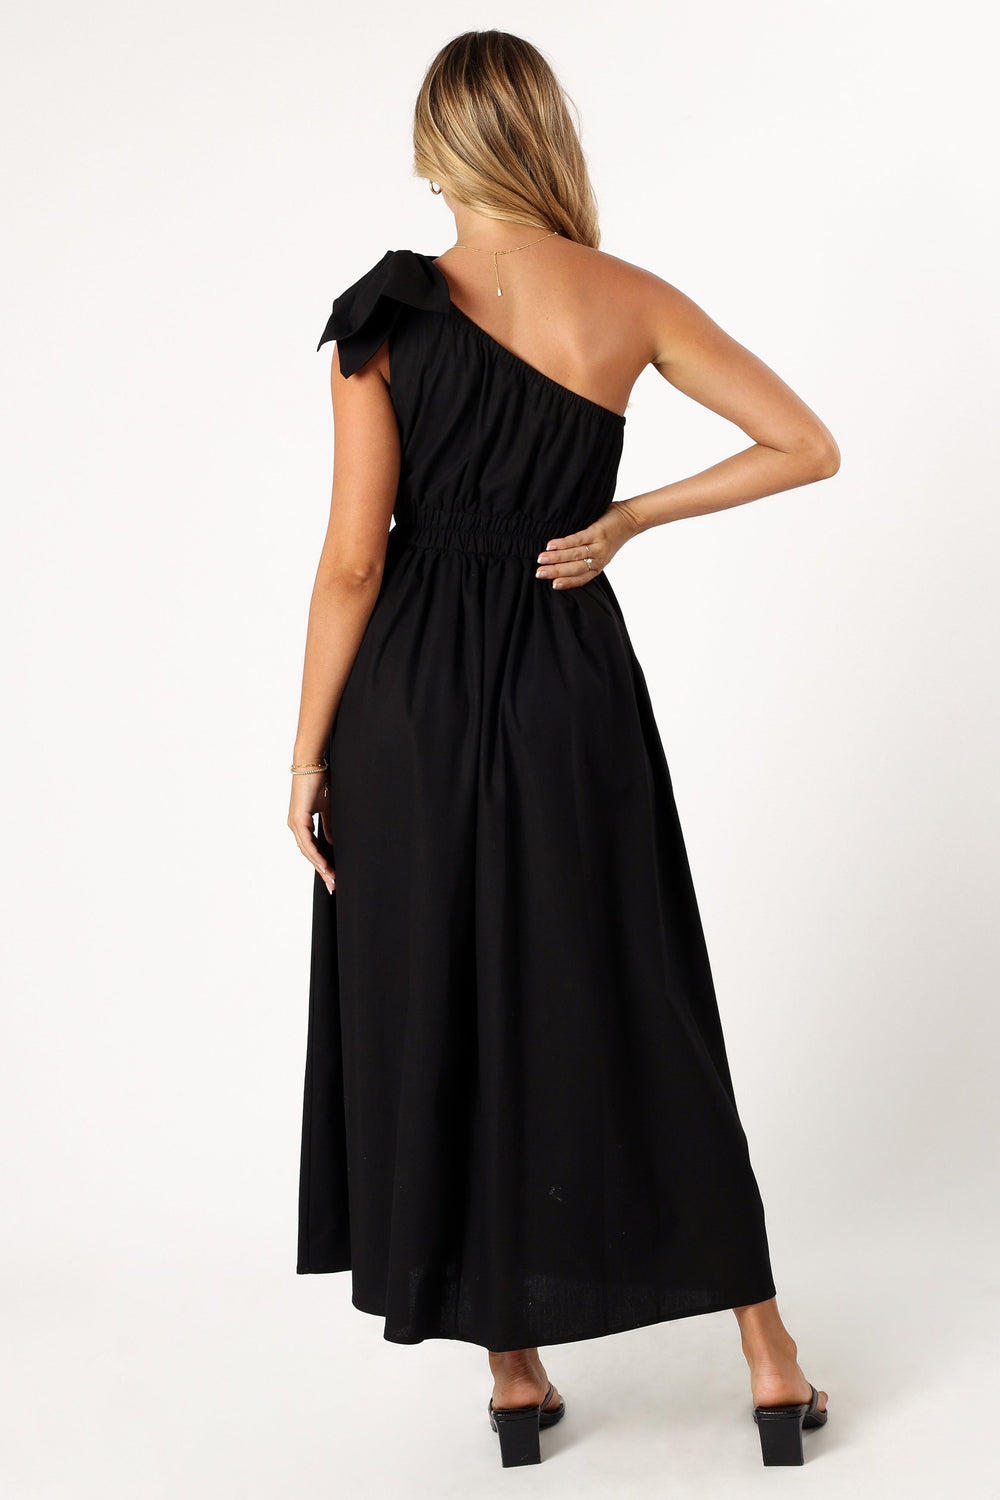 Petal and Pup USA DRESSES Kailey One Shoulder Maxi Dress - Black